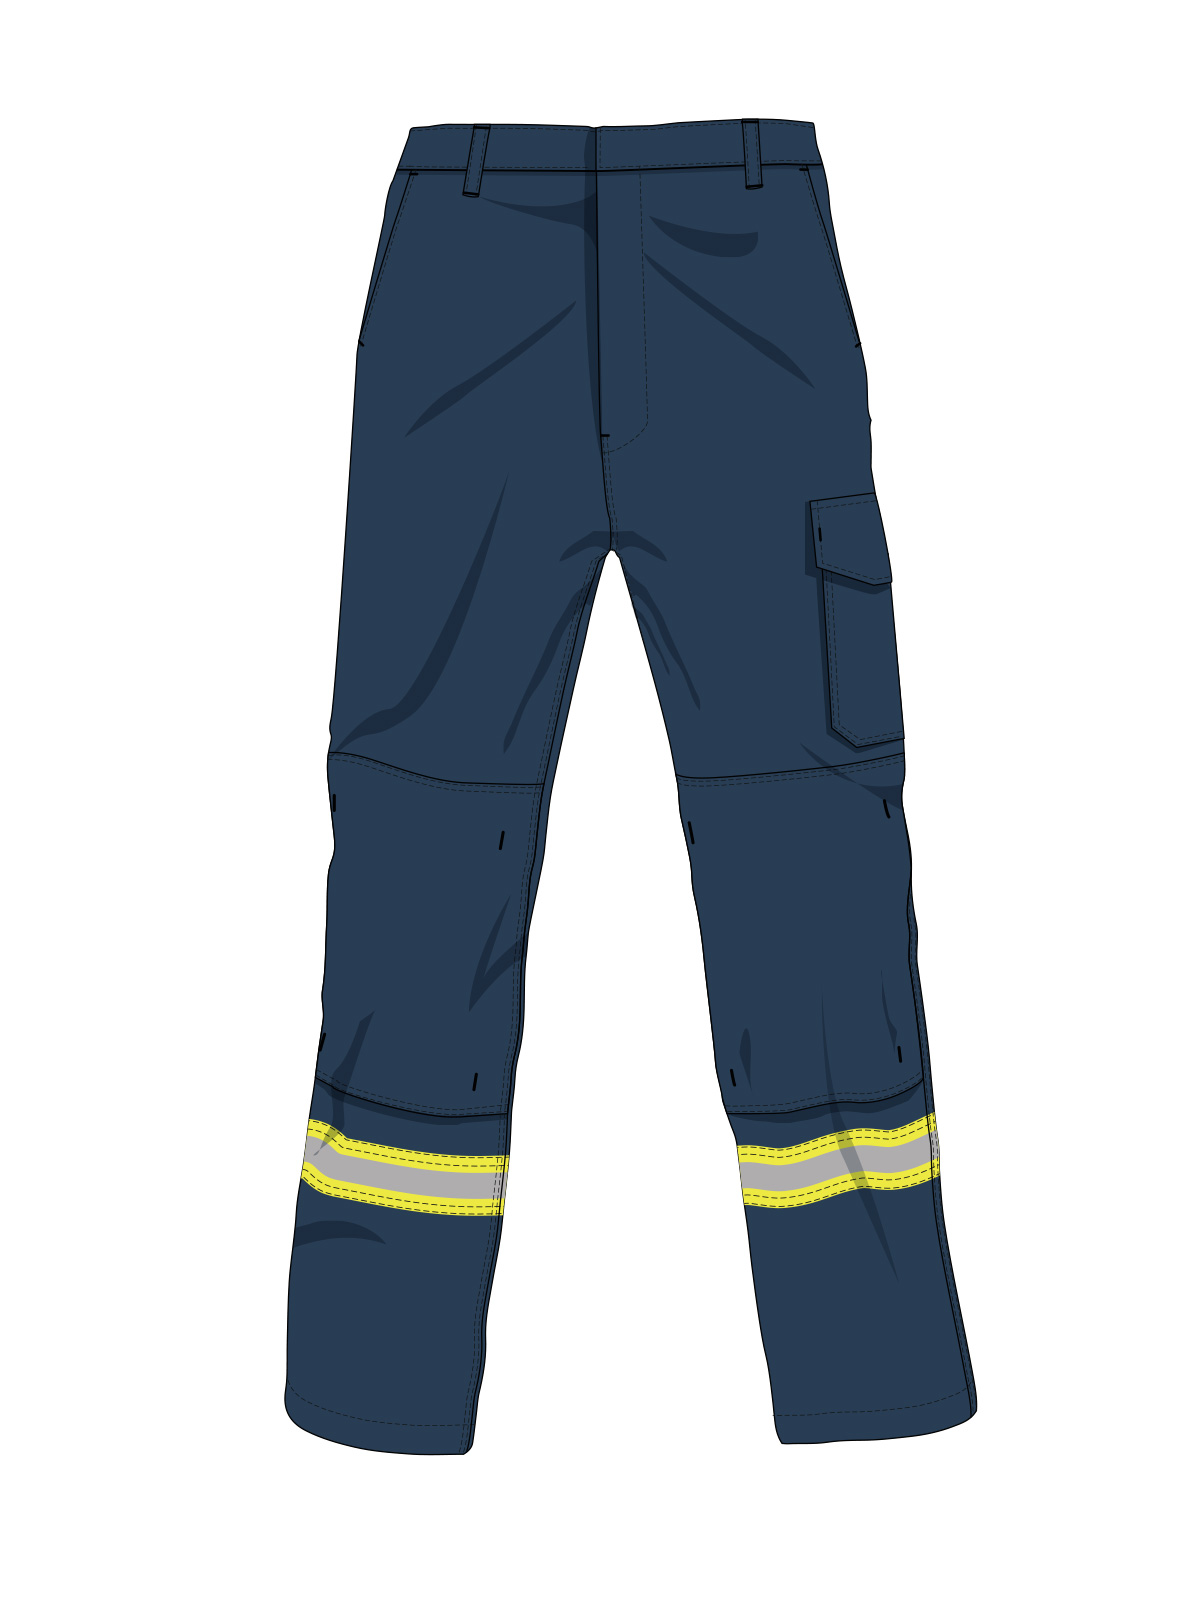 Secura Fire Retardant Trousers